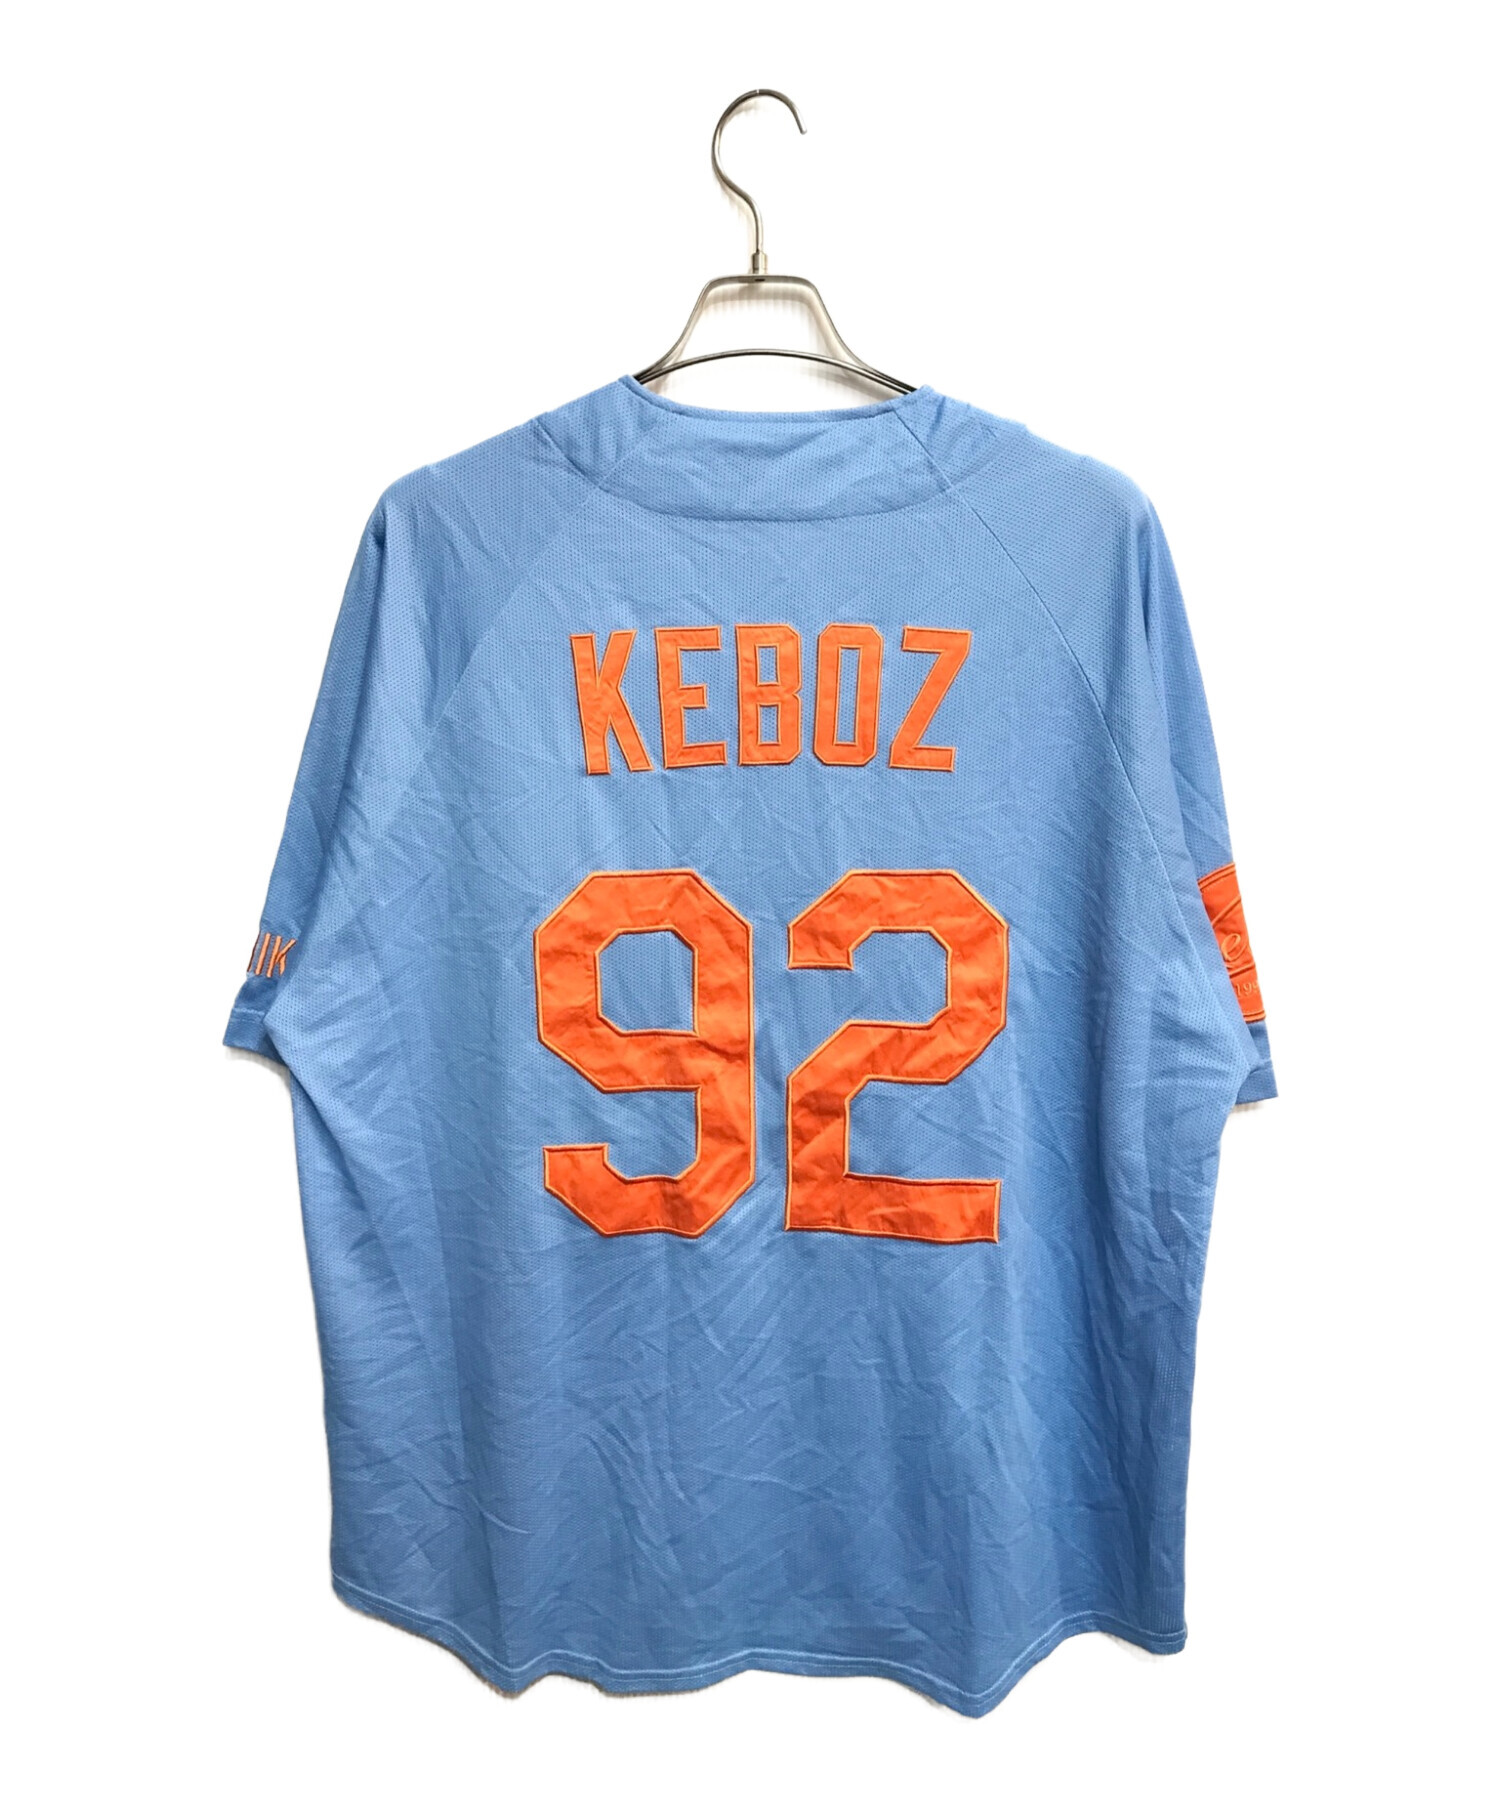 KEBOZ (ケボズ) ベースボールシャツ ブルー サイズ:L